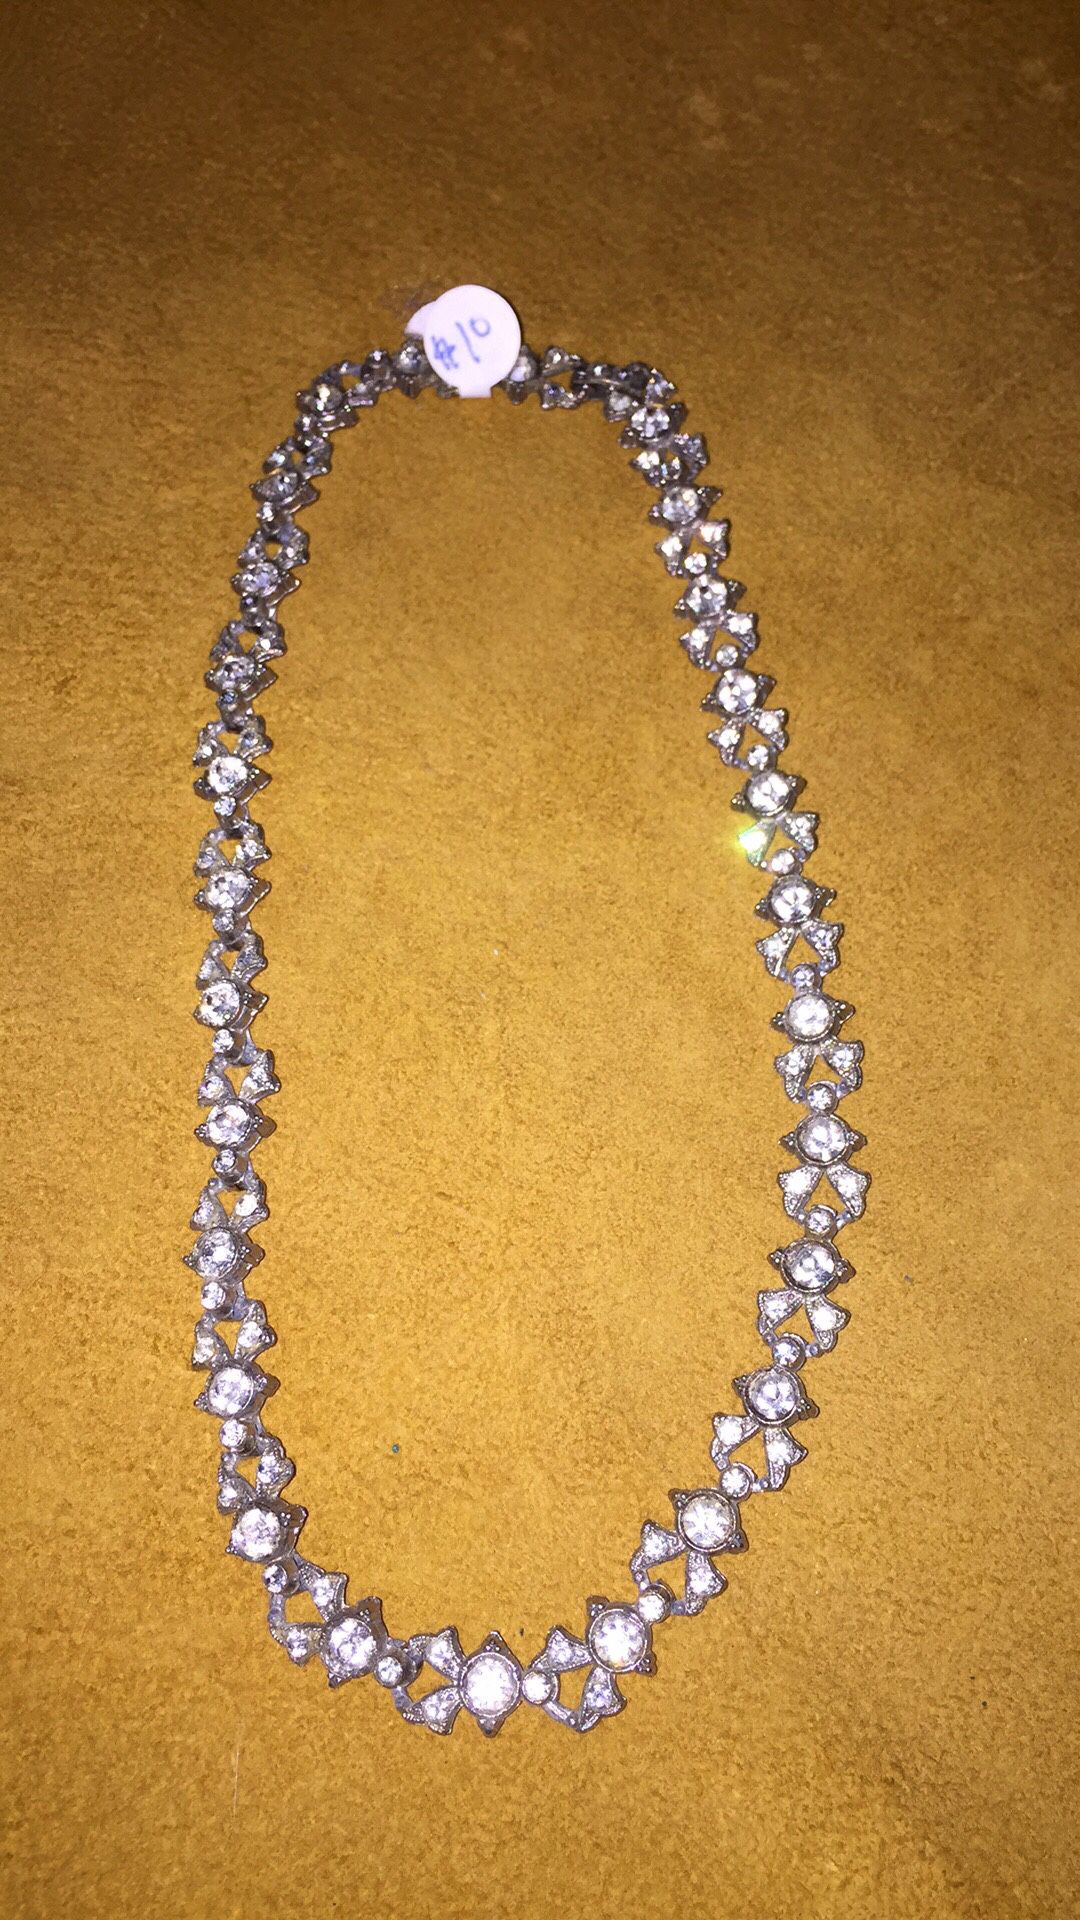 Vintage rhinestone necklace